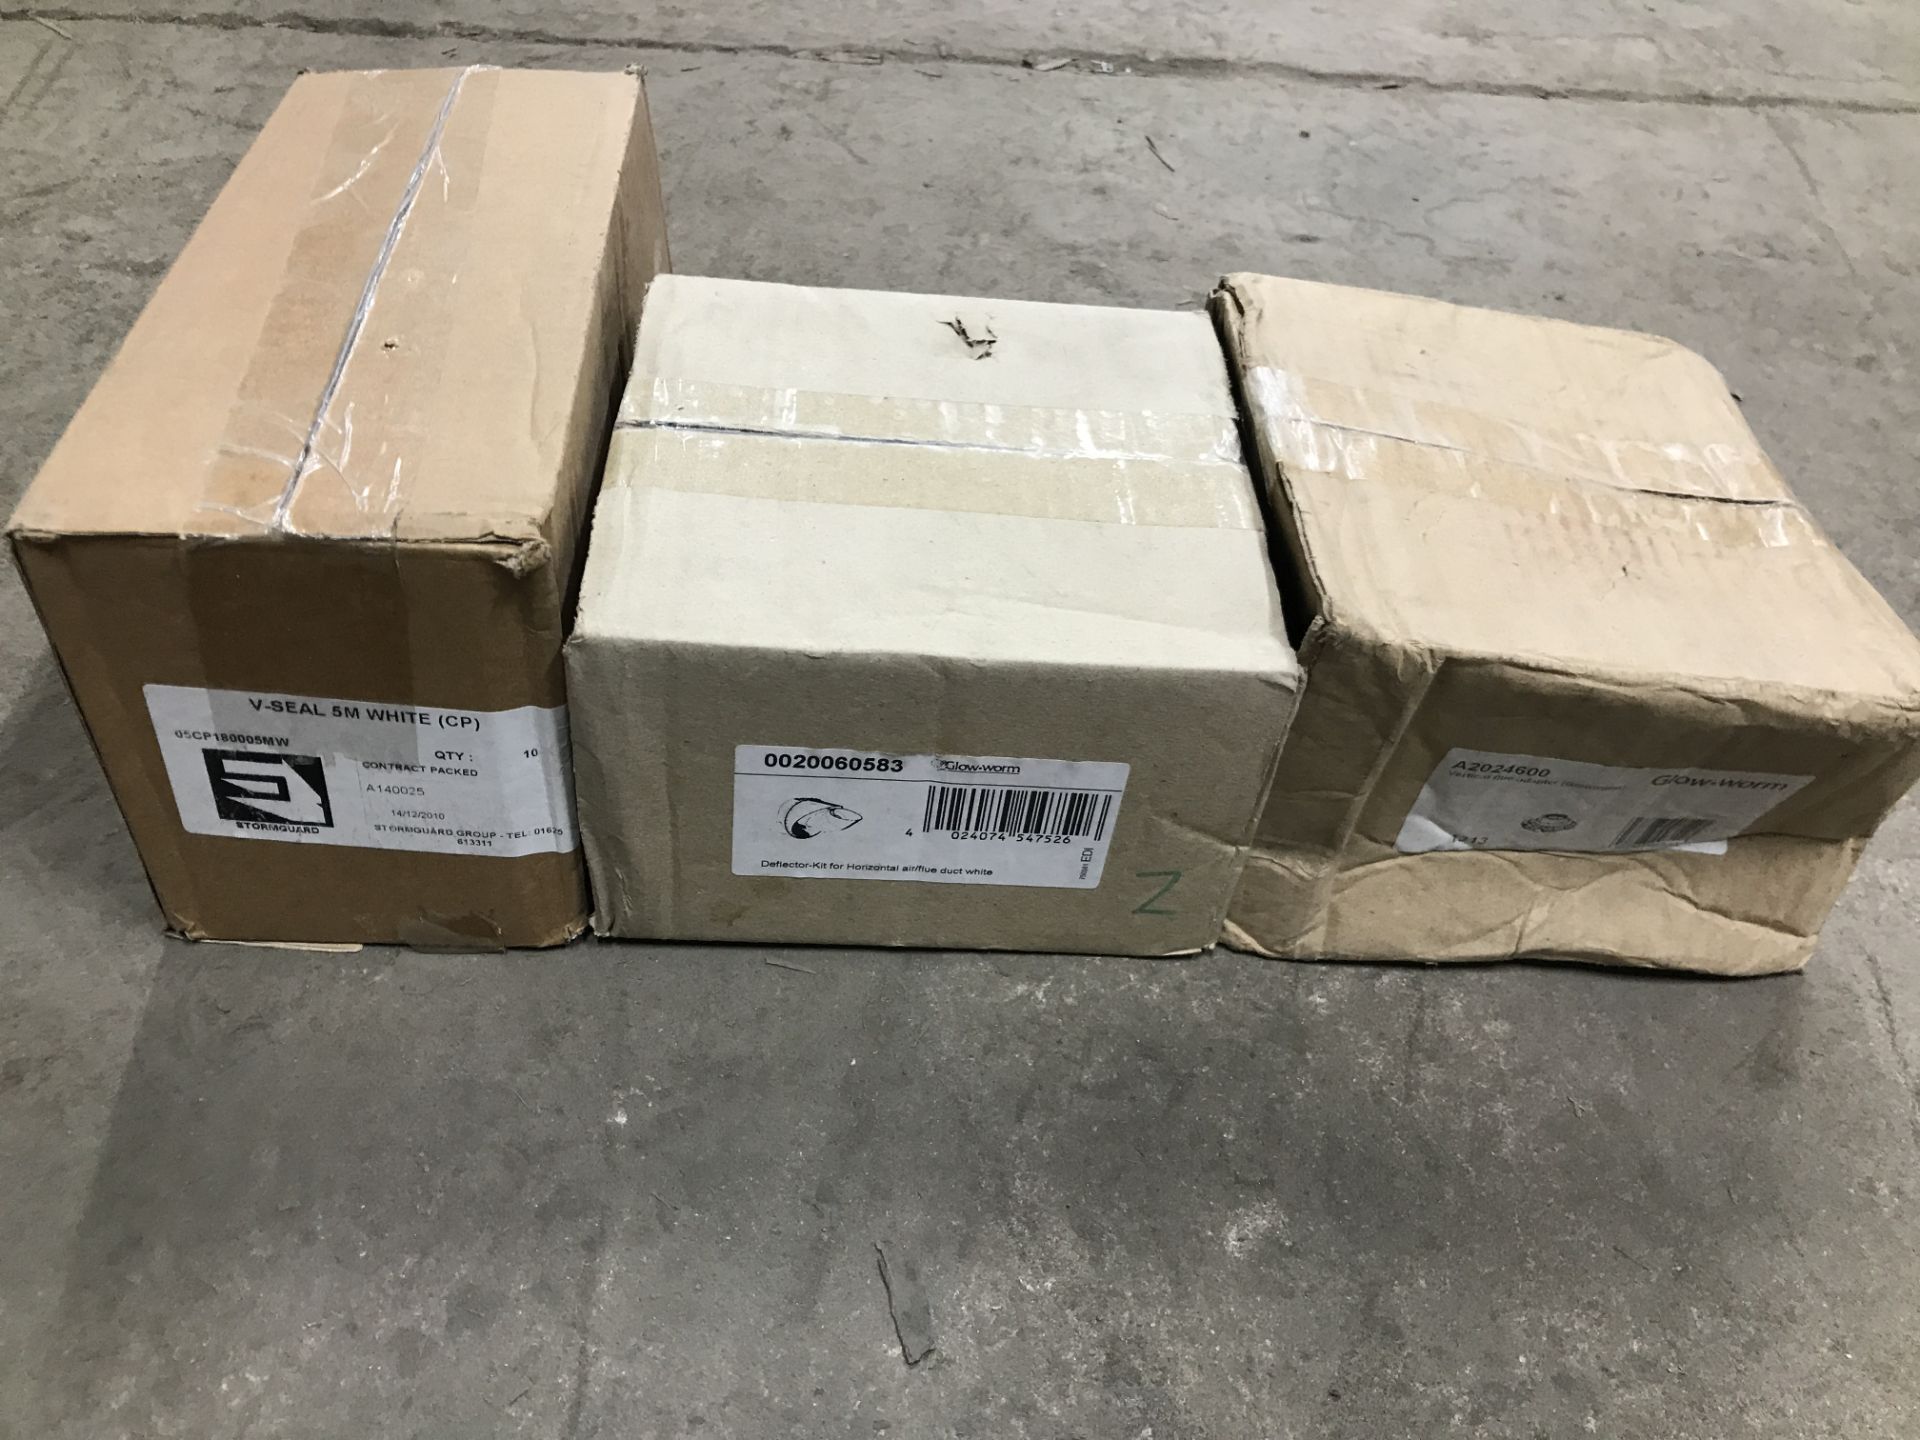 7 x Boxes of 5m V-Seal (white) & 2 x Glowworm Vertical Flue Adaters w/ Glowworm Defector Kit